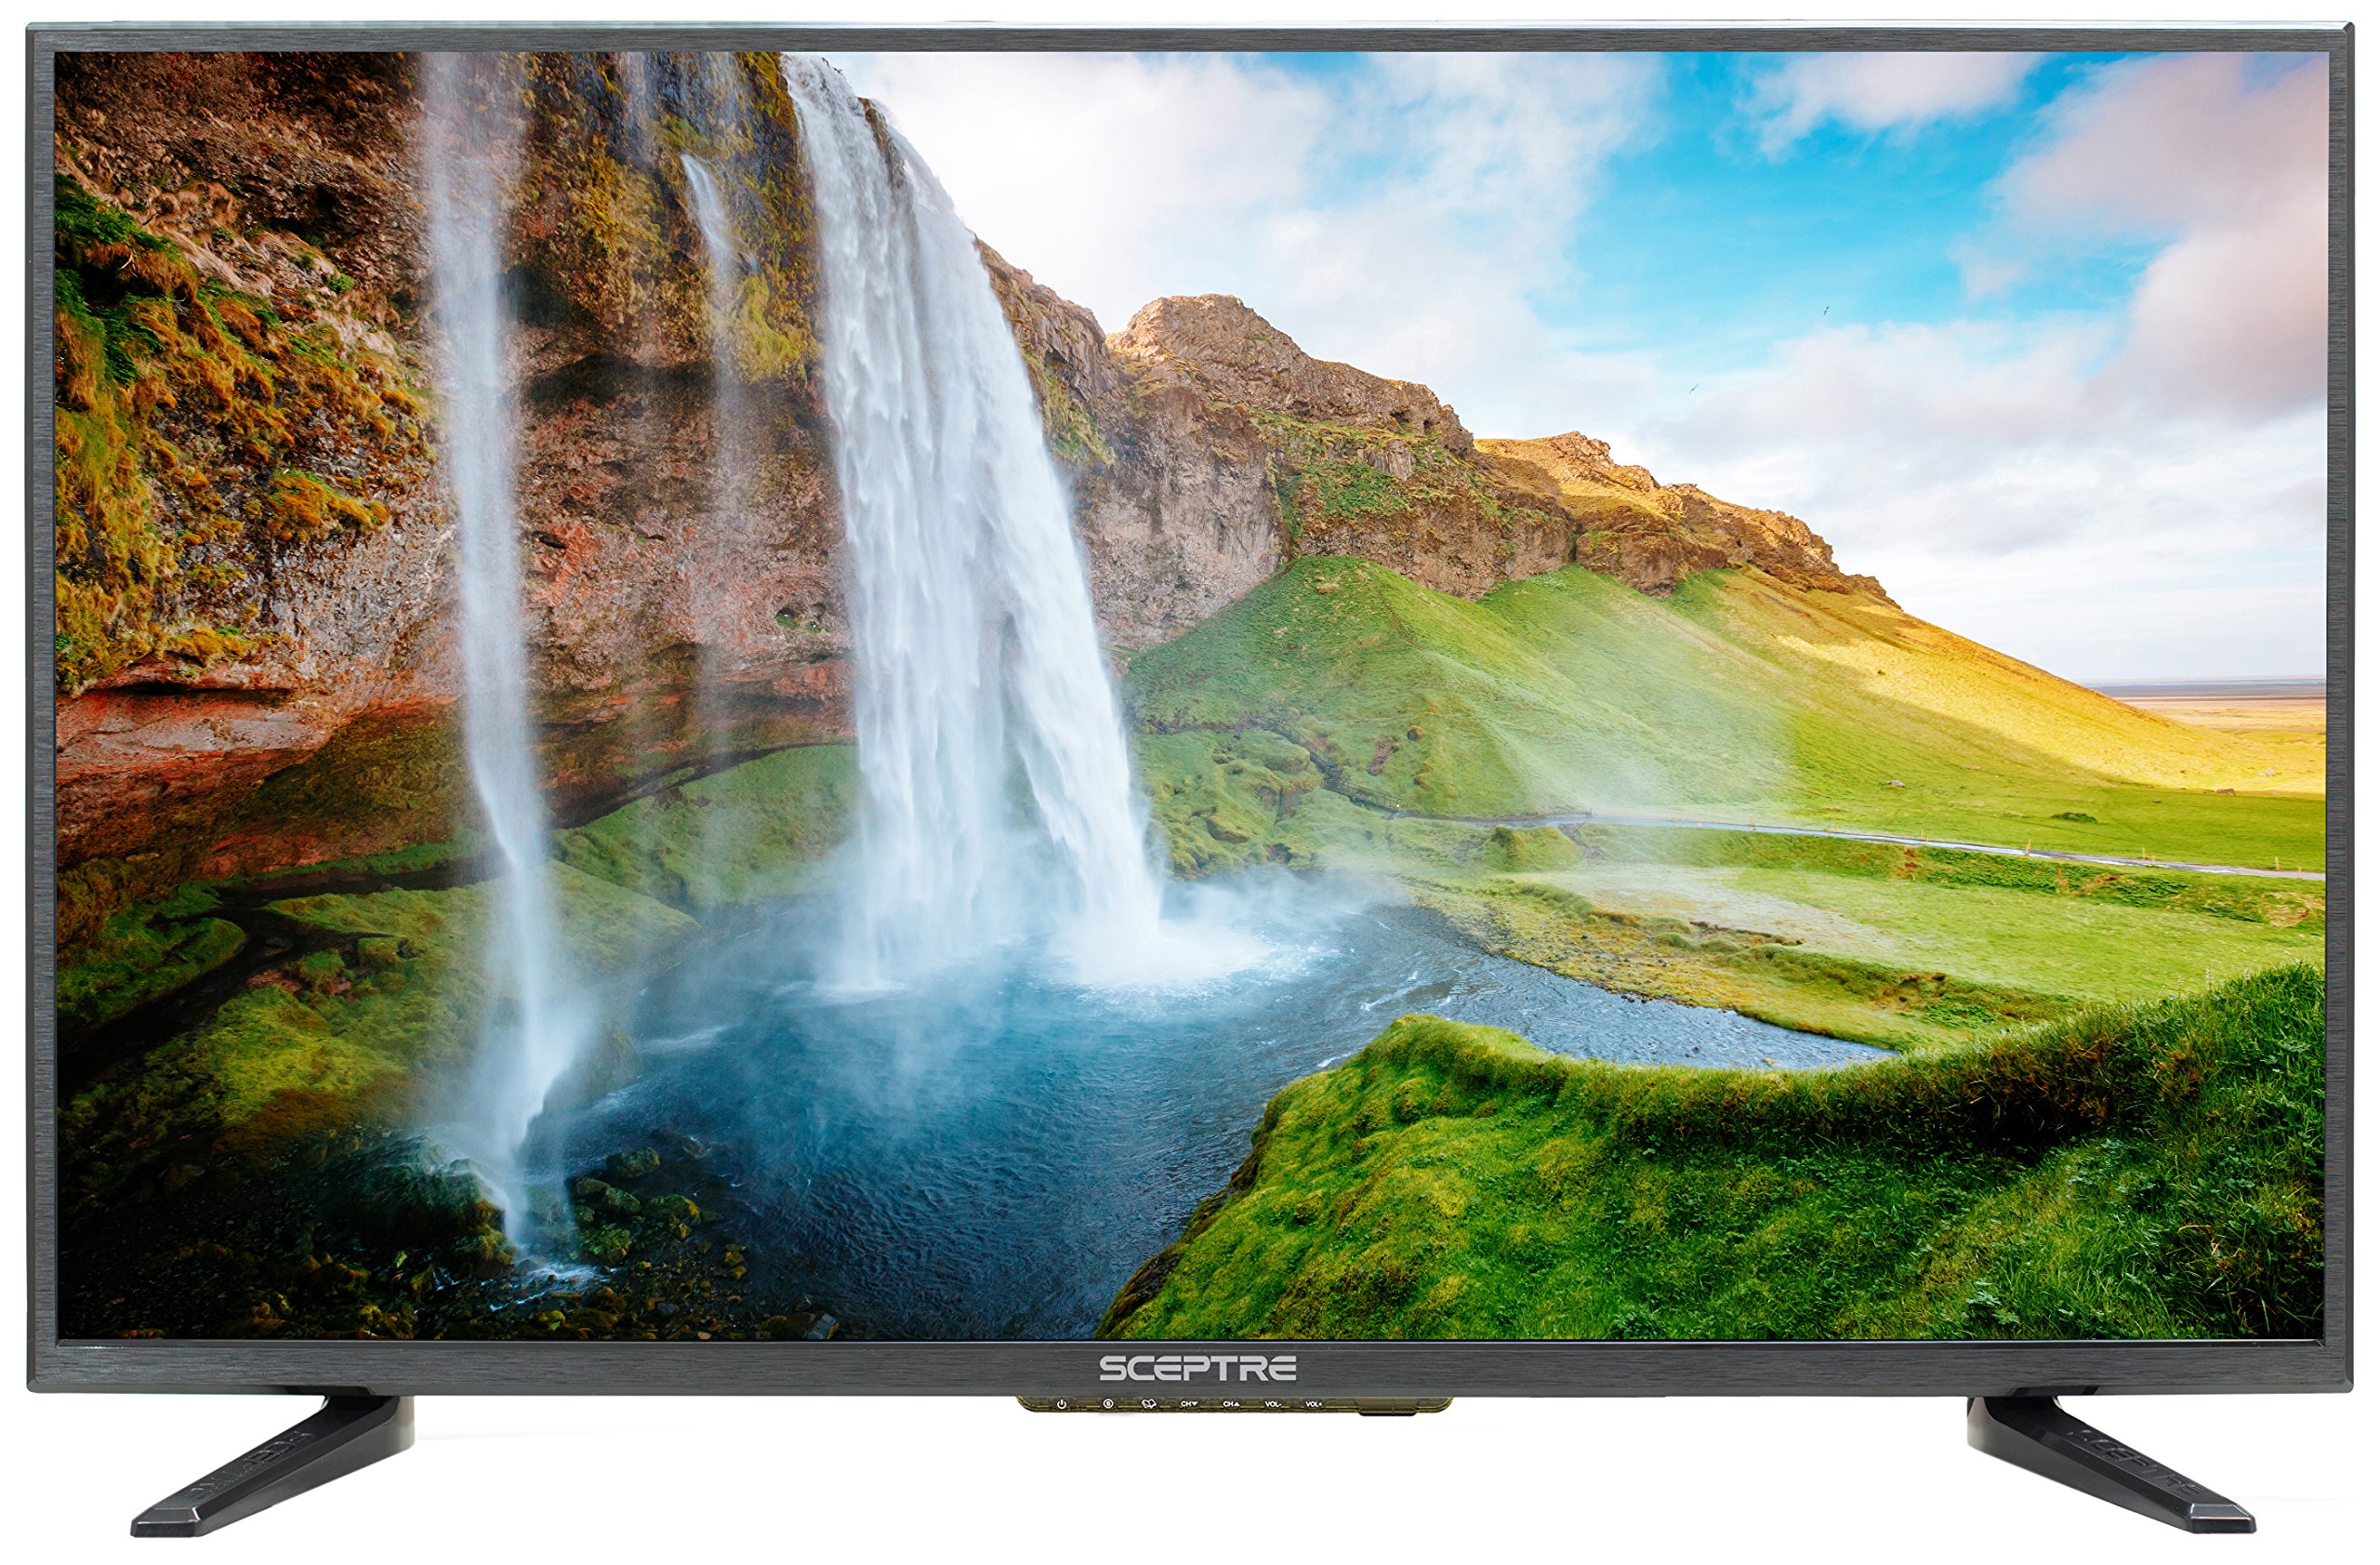 Sceptre 32인치 클래스 HD(720P) LED TV(X322BV-SR)